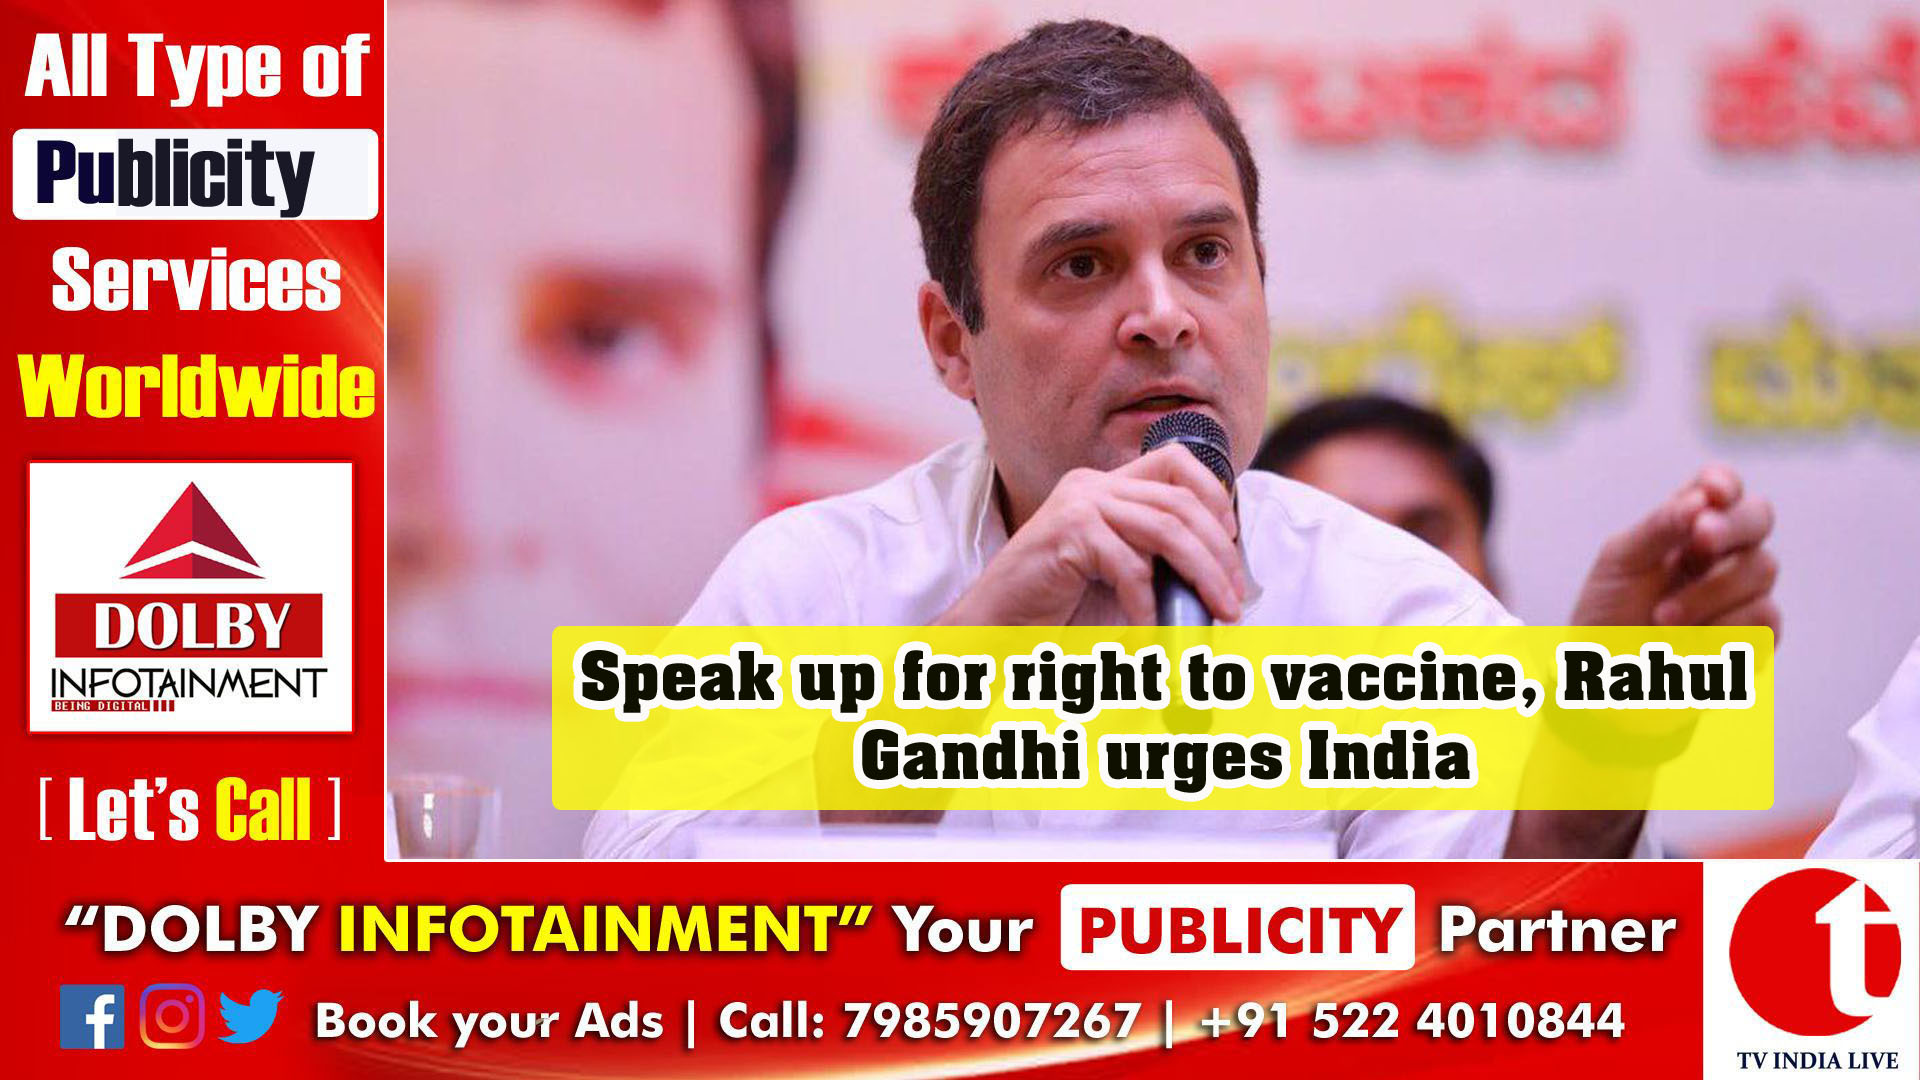 Speak up for right to vaccine, Rahul Gandhi urges India